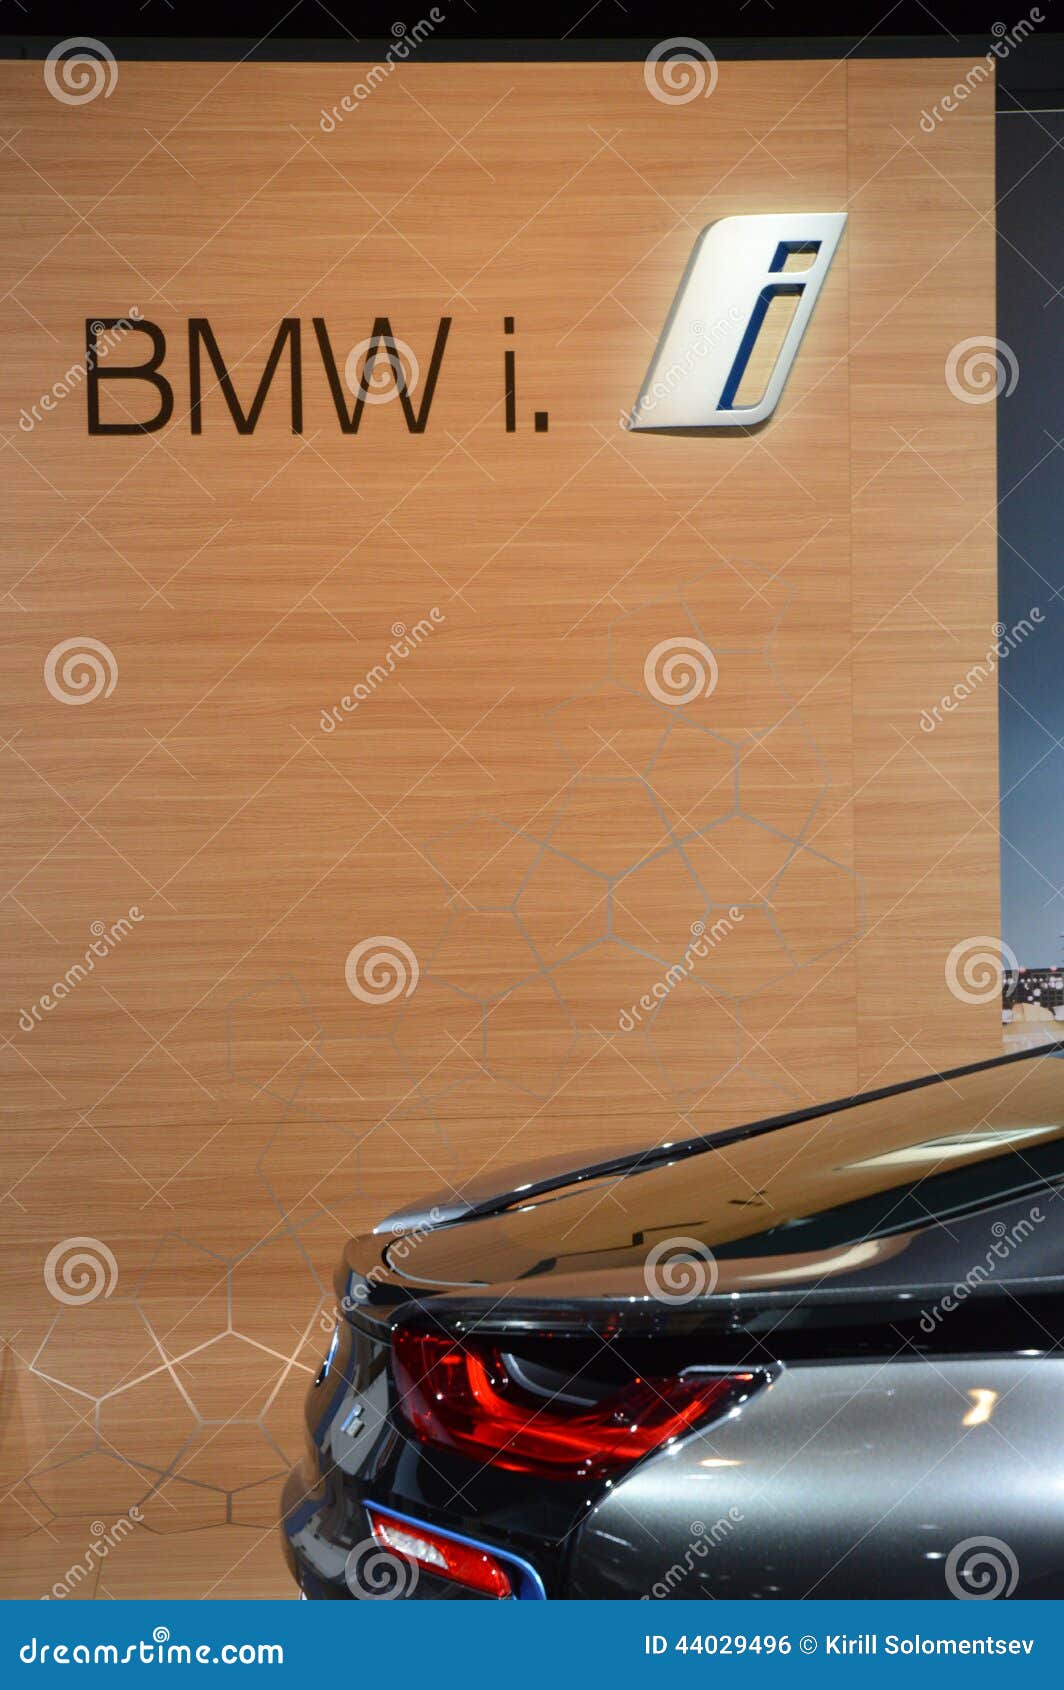 Premiere International Automobile Salon BMW I8 Back Light Photo - Image of doors, driving: